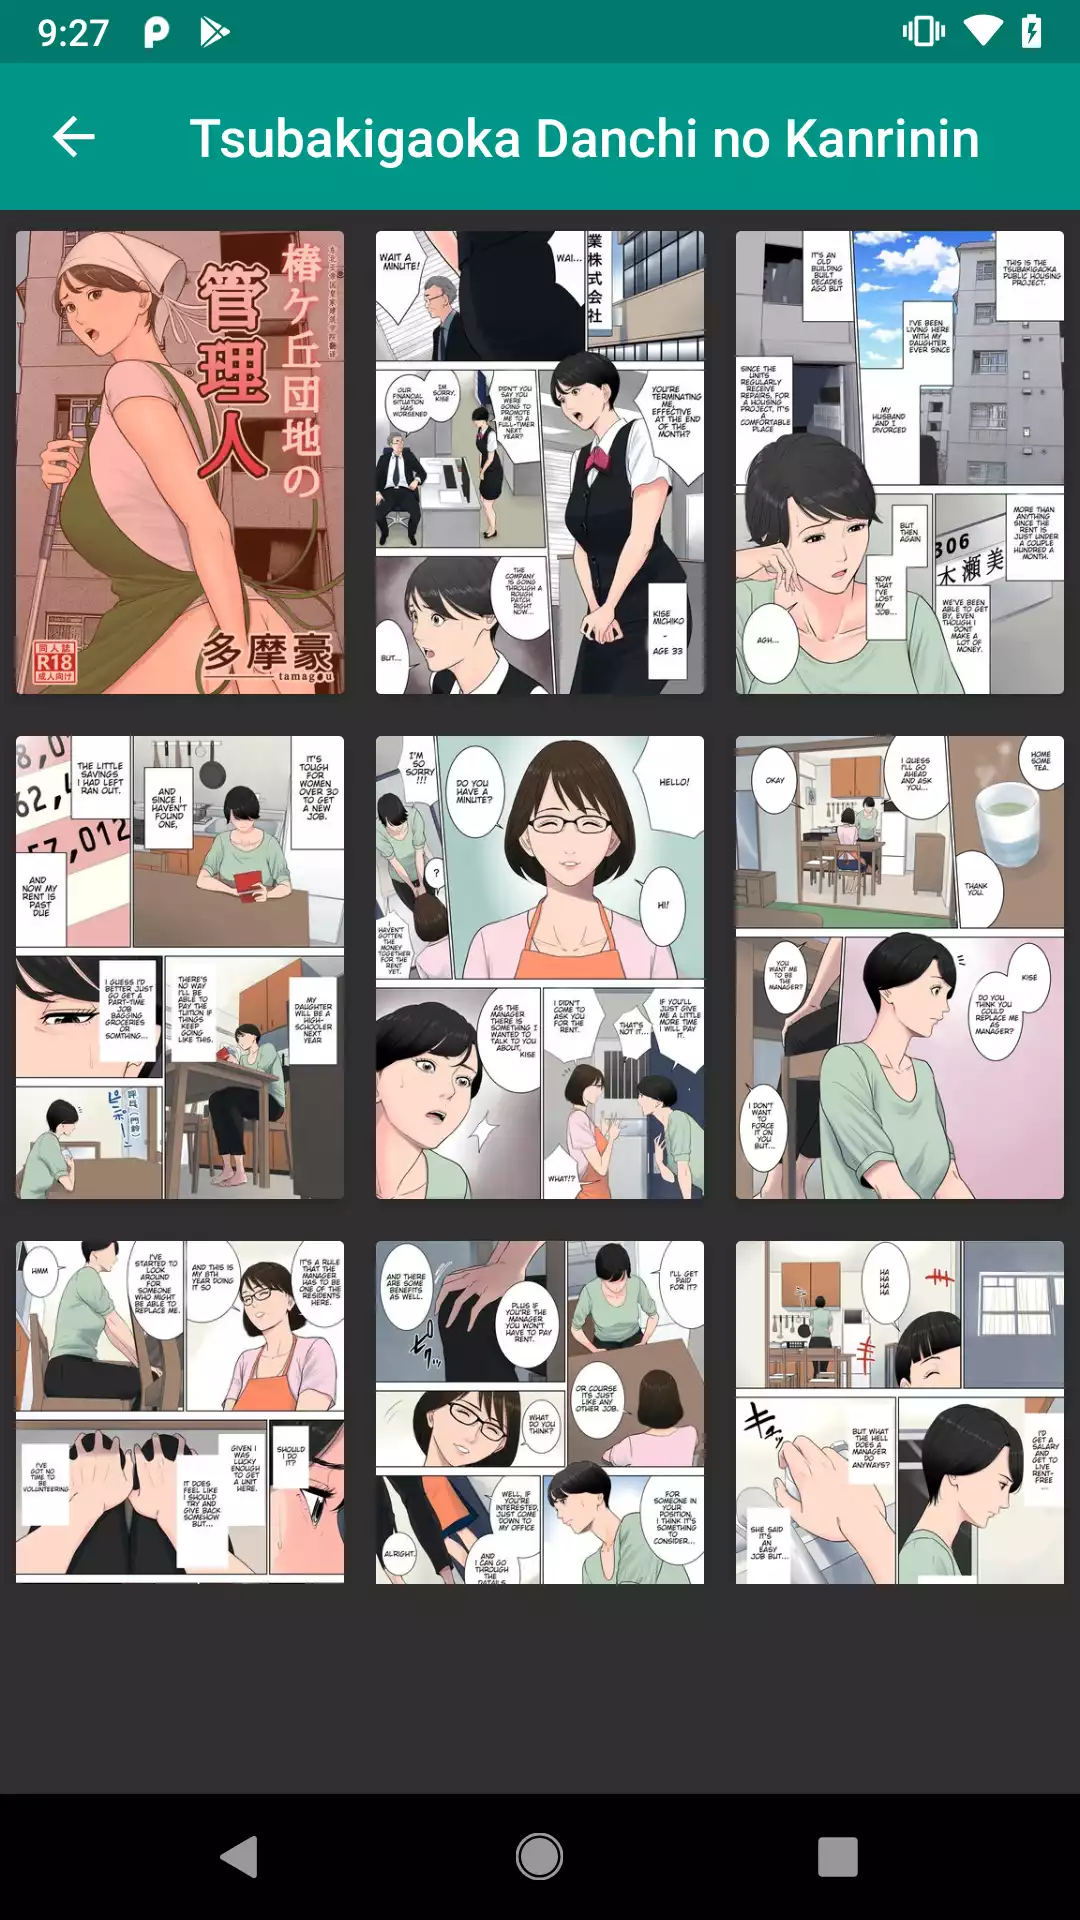 Tsubakigaoka Danchi no Kanrinin comics,hentie,wallpapers,apps,hentai,download,comic,wallpaper,hot,android,pics,photos,app,apk,porn,puzzle,adult,sexy,collection,game,futanari